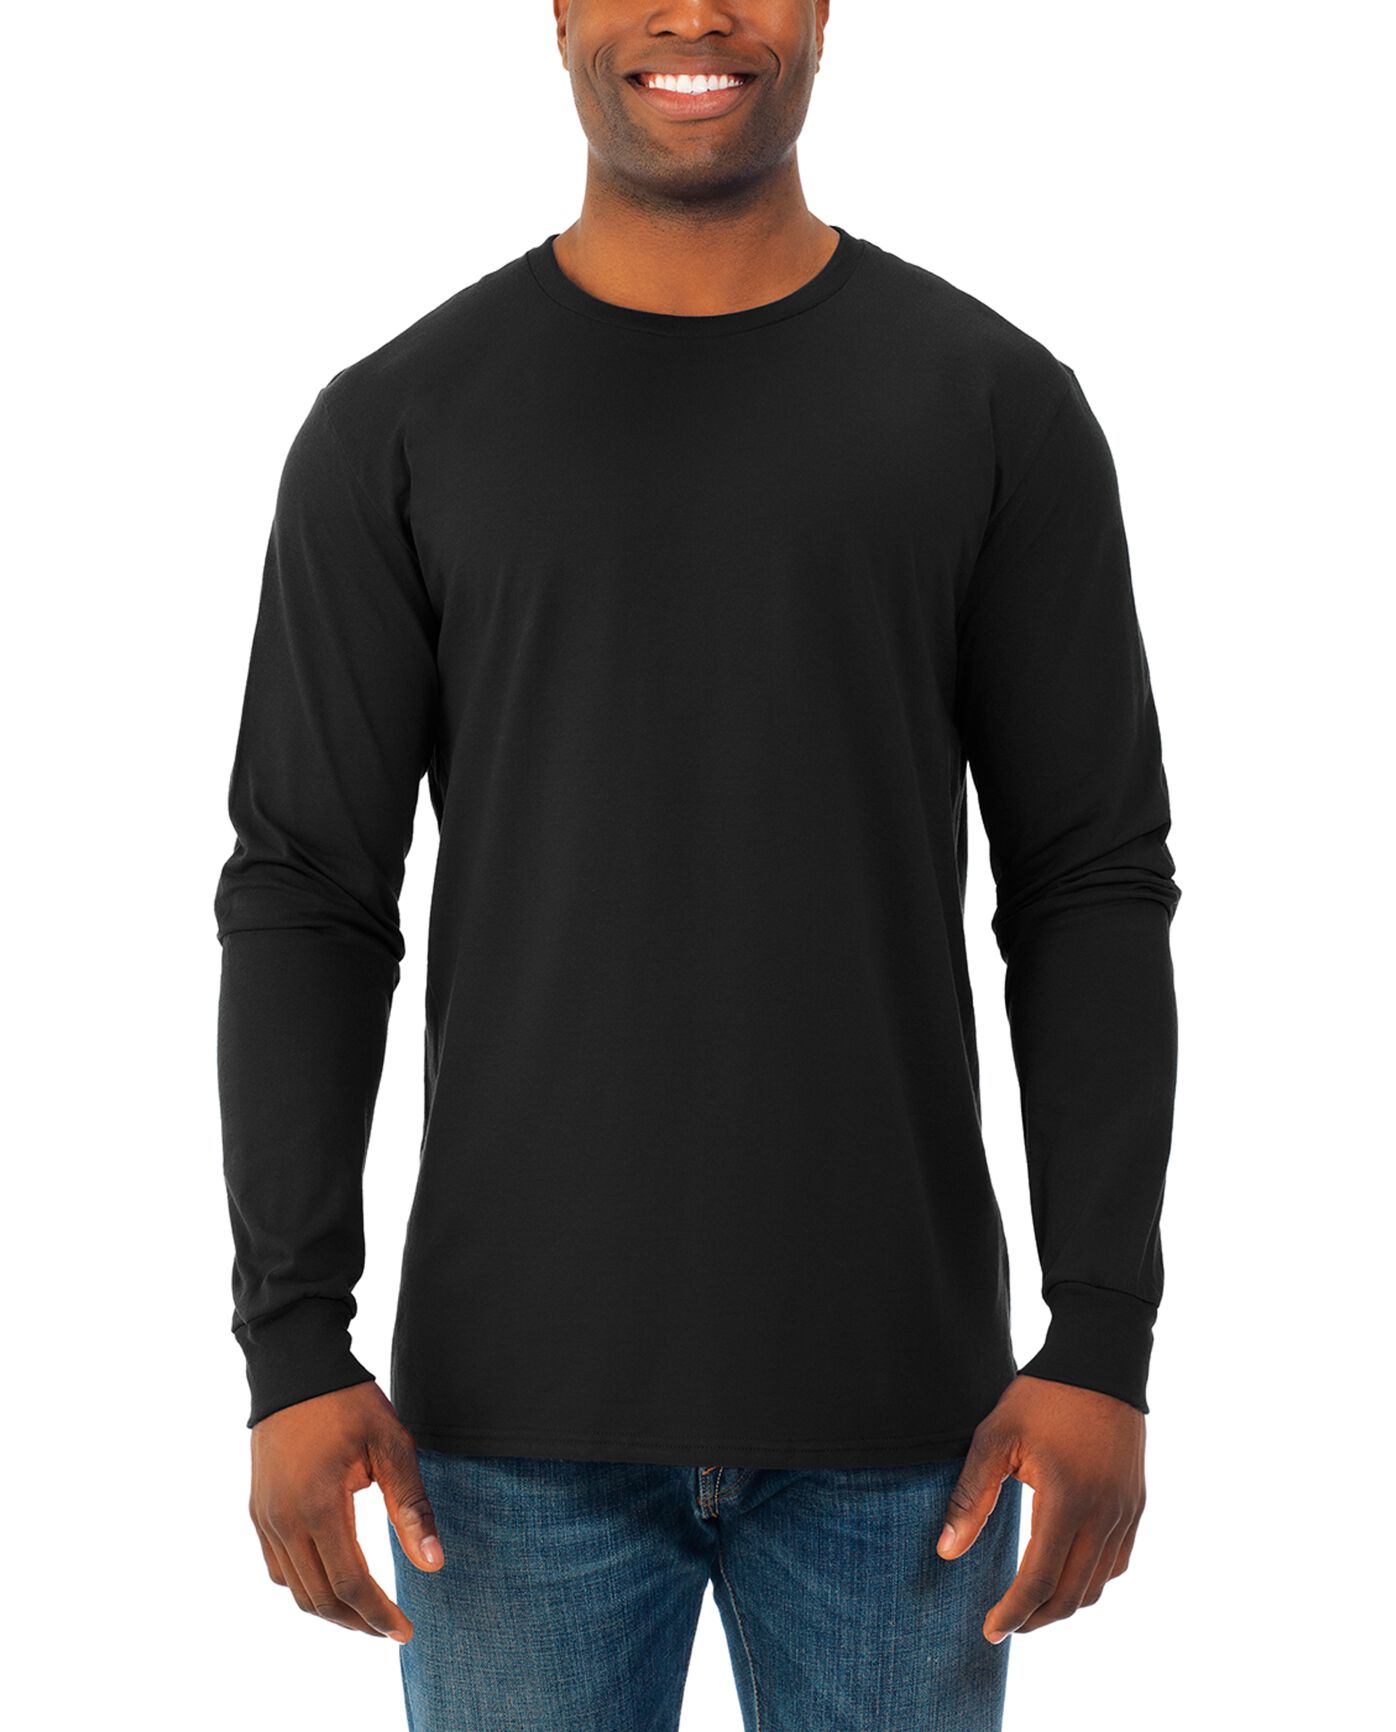 Soft Long Sleeve Crew Neck T-Shirt, 2 Pack